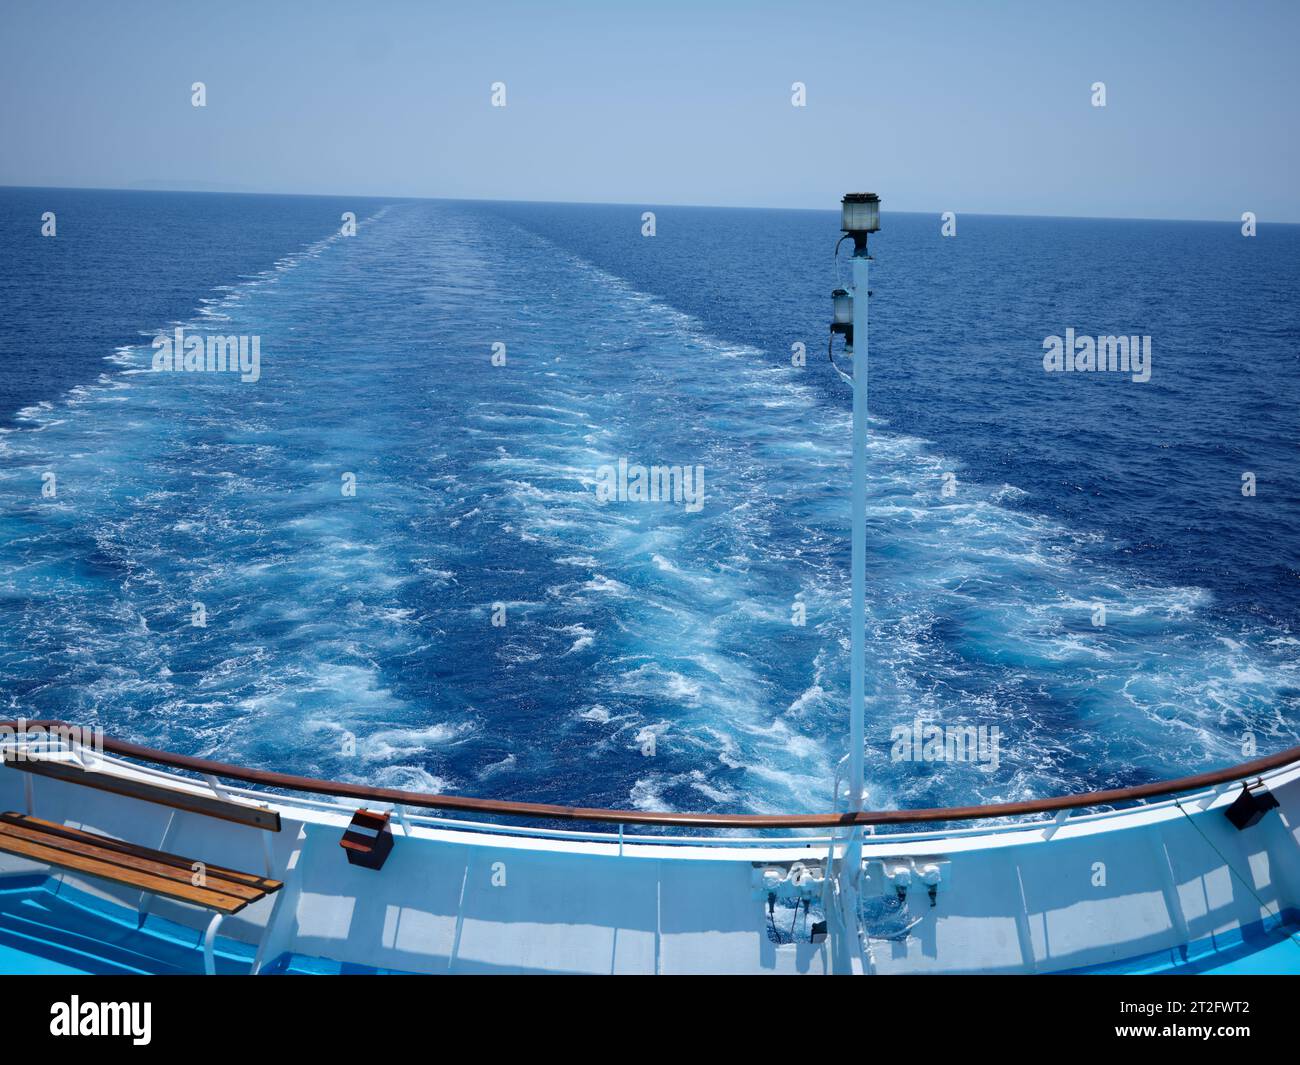 Wake of a ship. Stock Photo